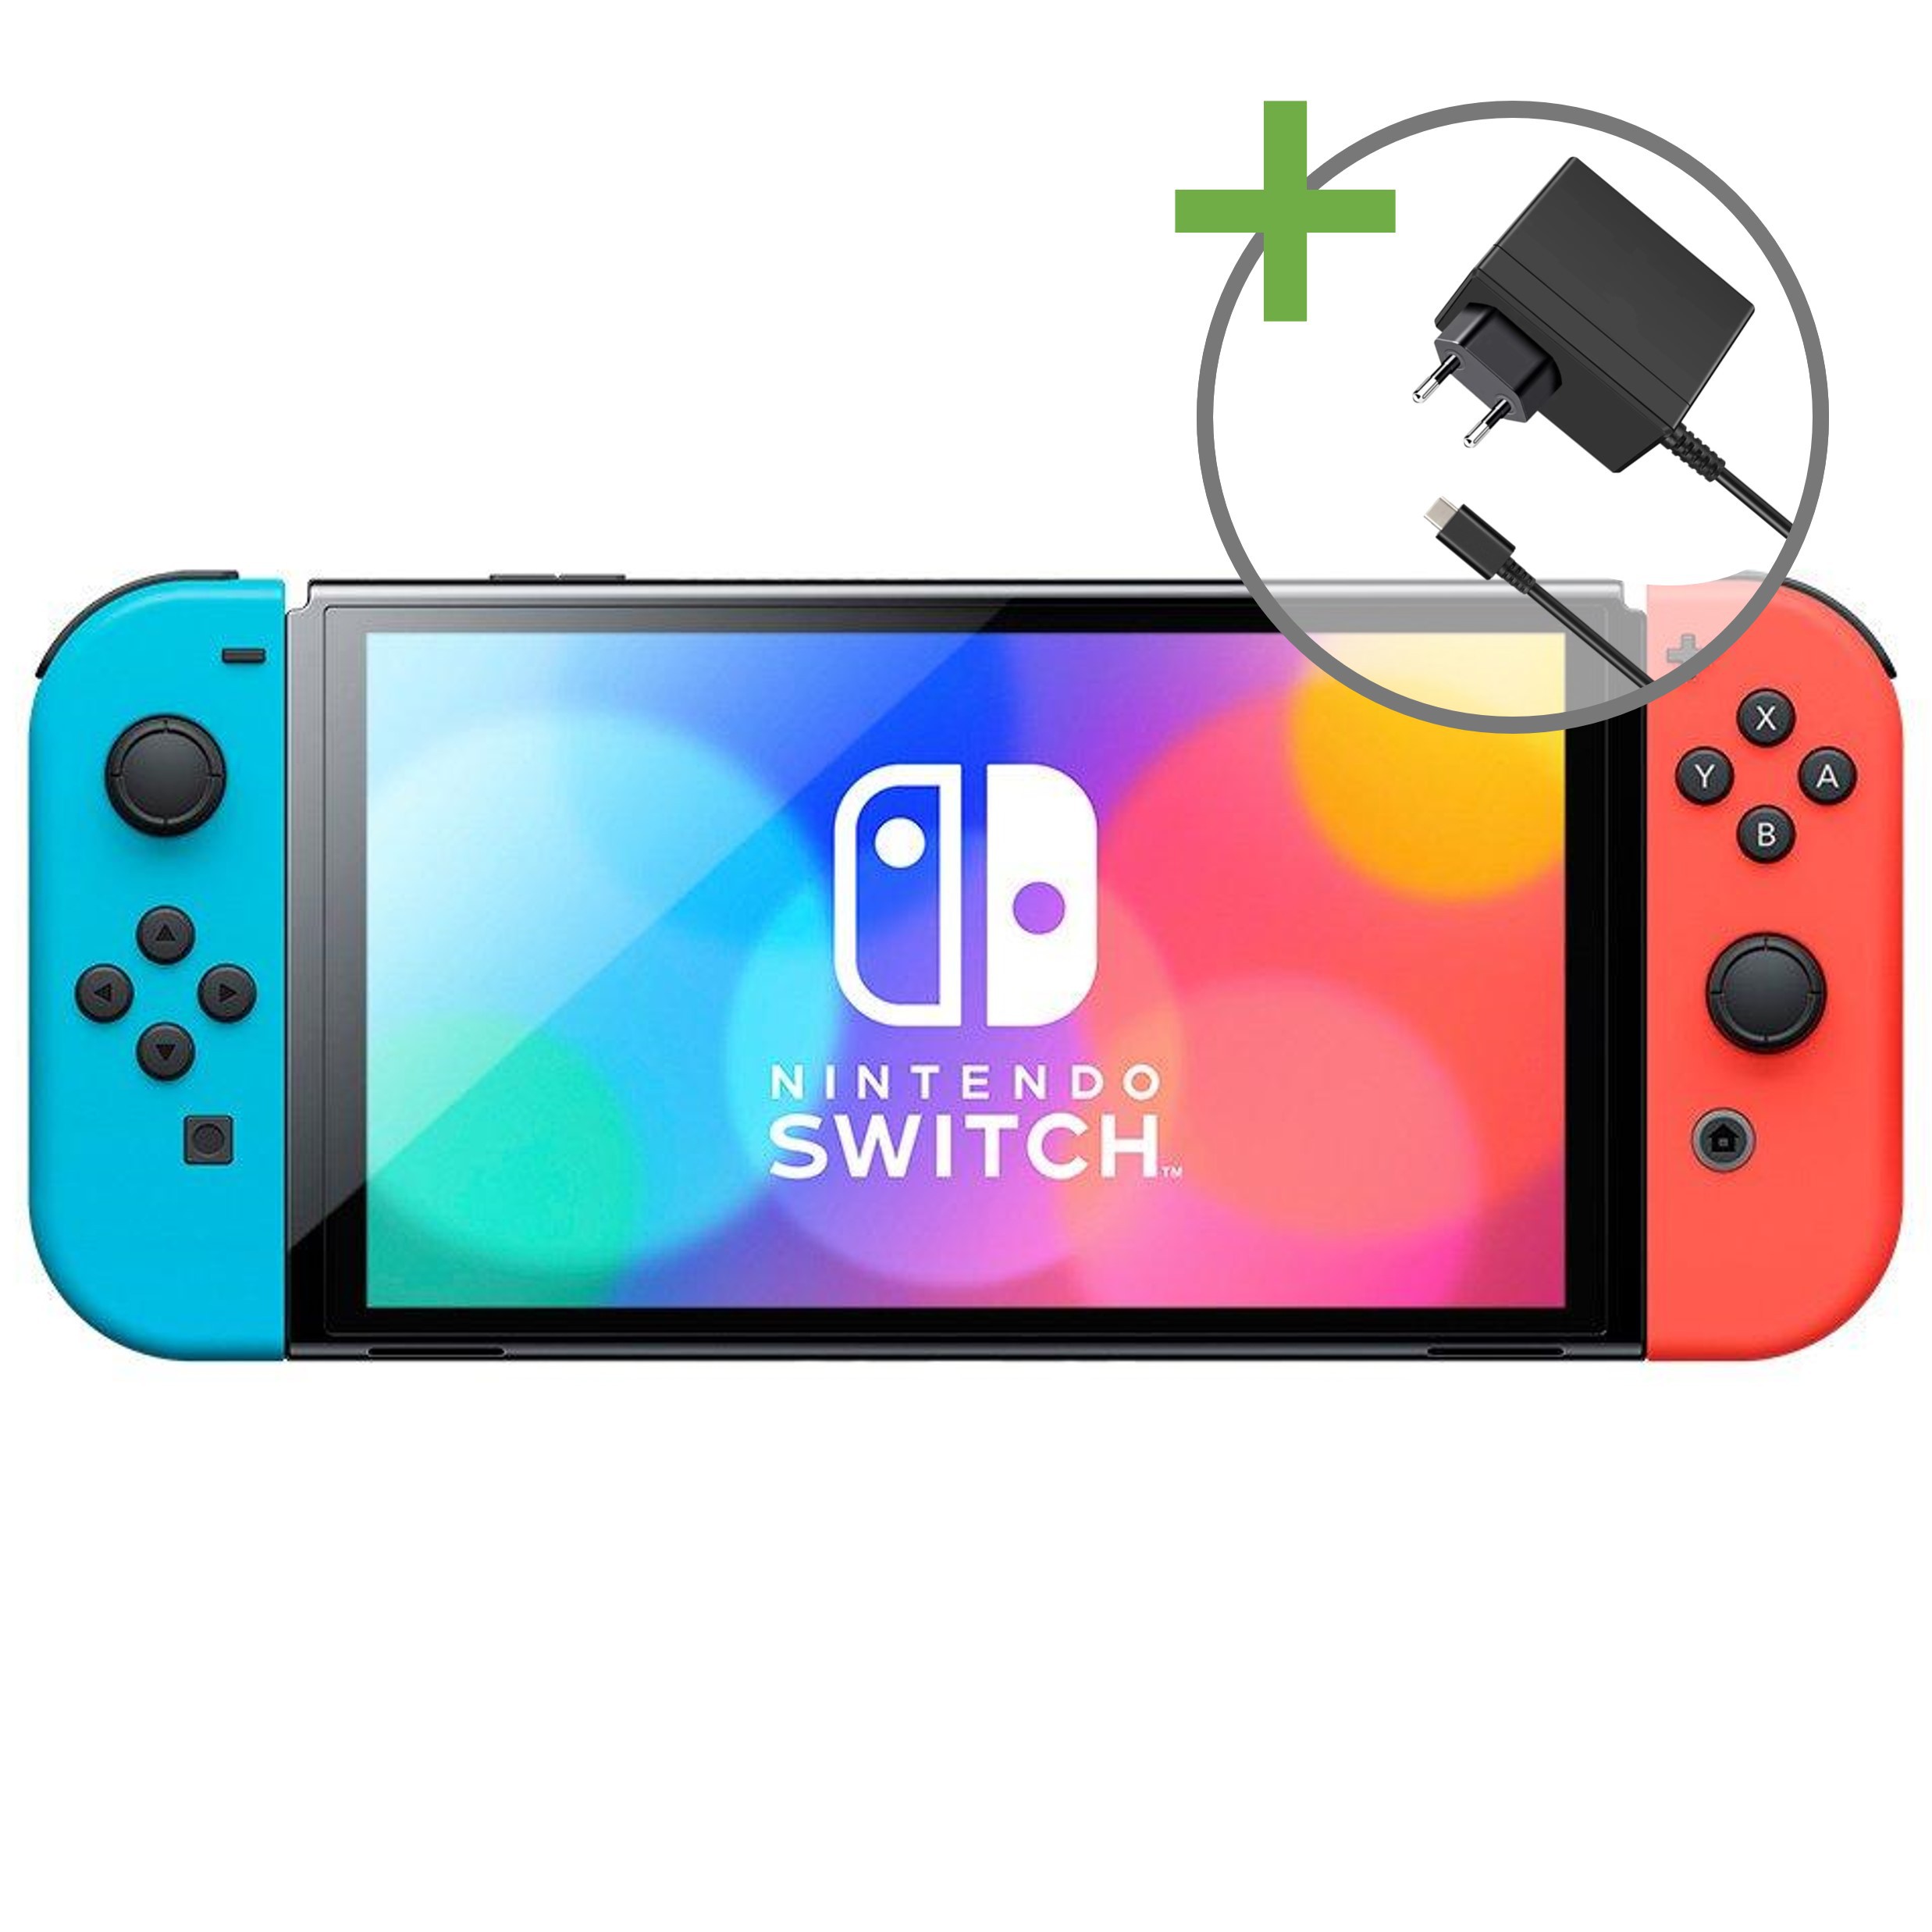 Nintendo Switch OLED Console - Red/Blue - Nintendo Switch Hardware